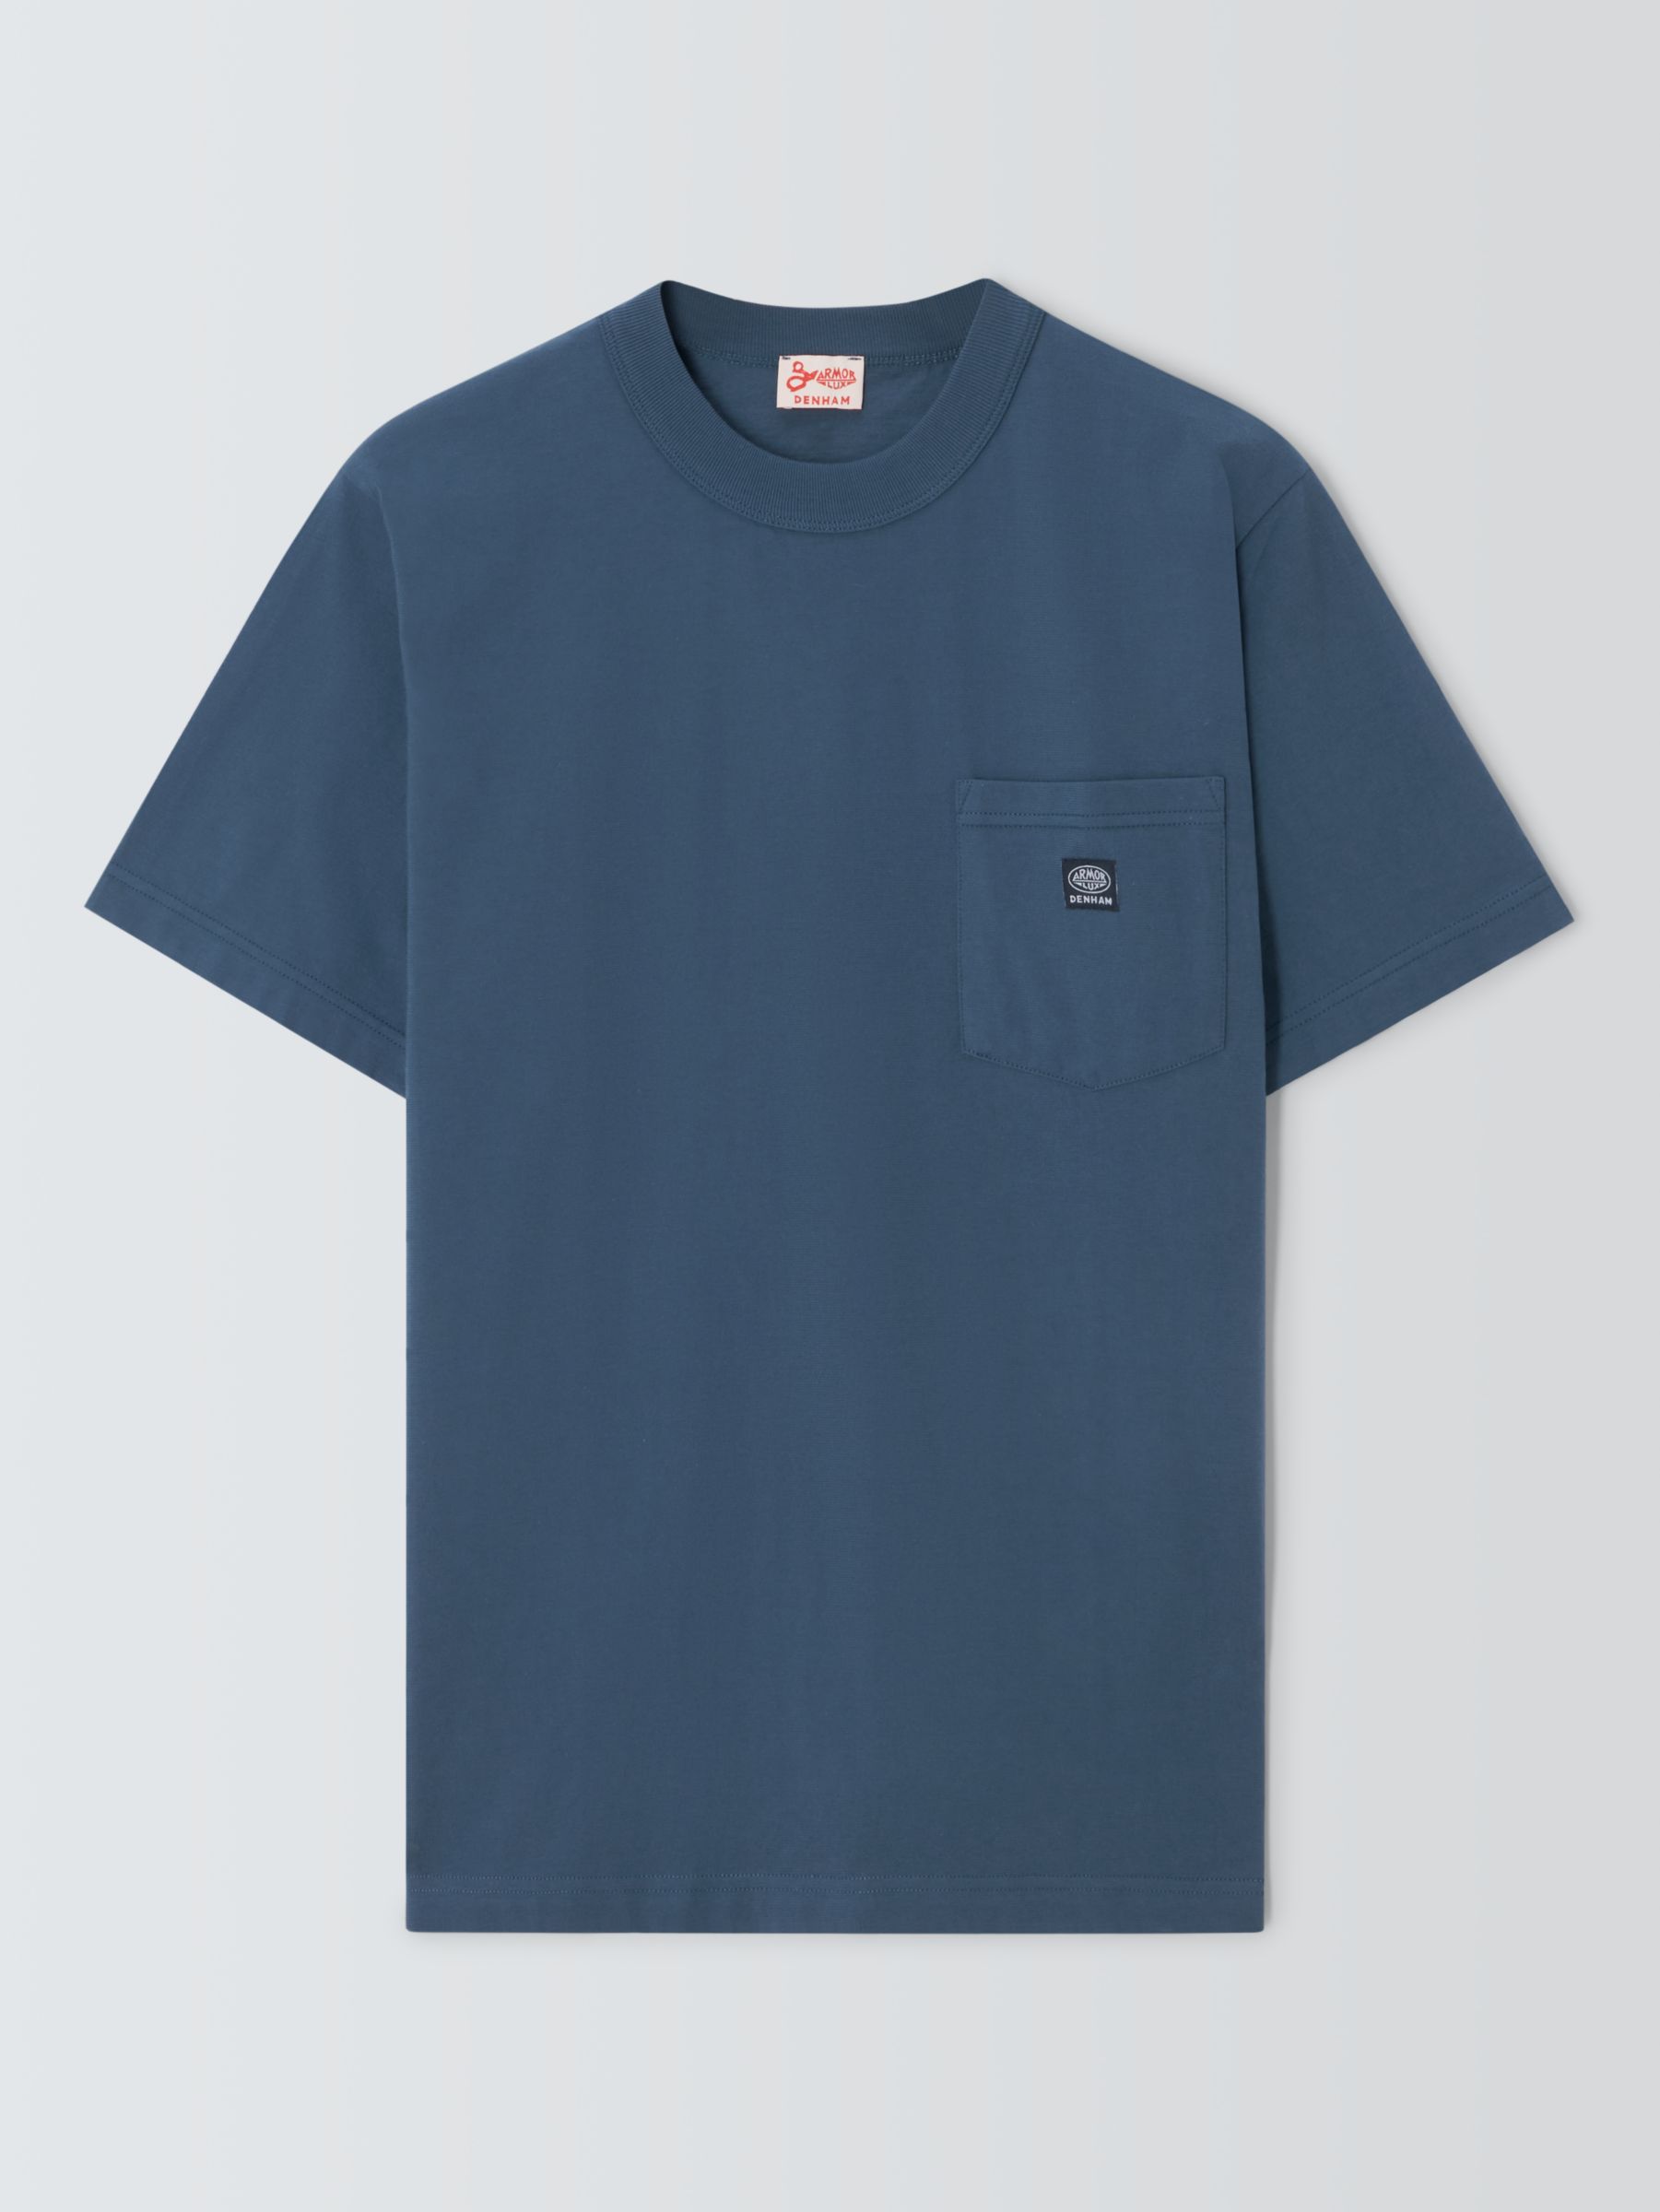 Buy Armor Lux x Denham Comfort Fit Plain Short Sleeve T-Shirt Online at johnlewis.com